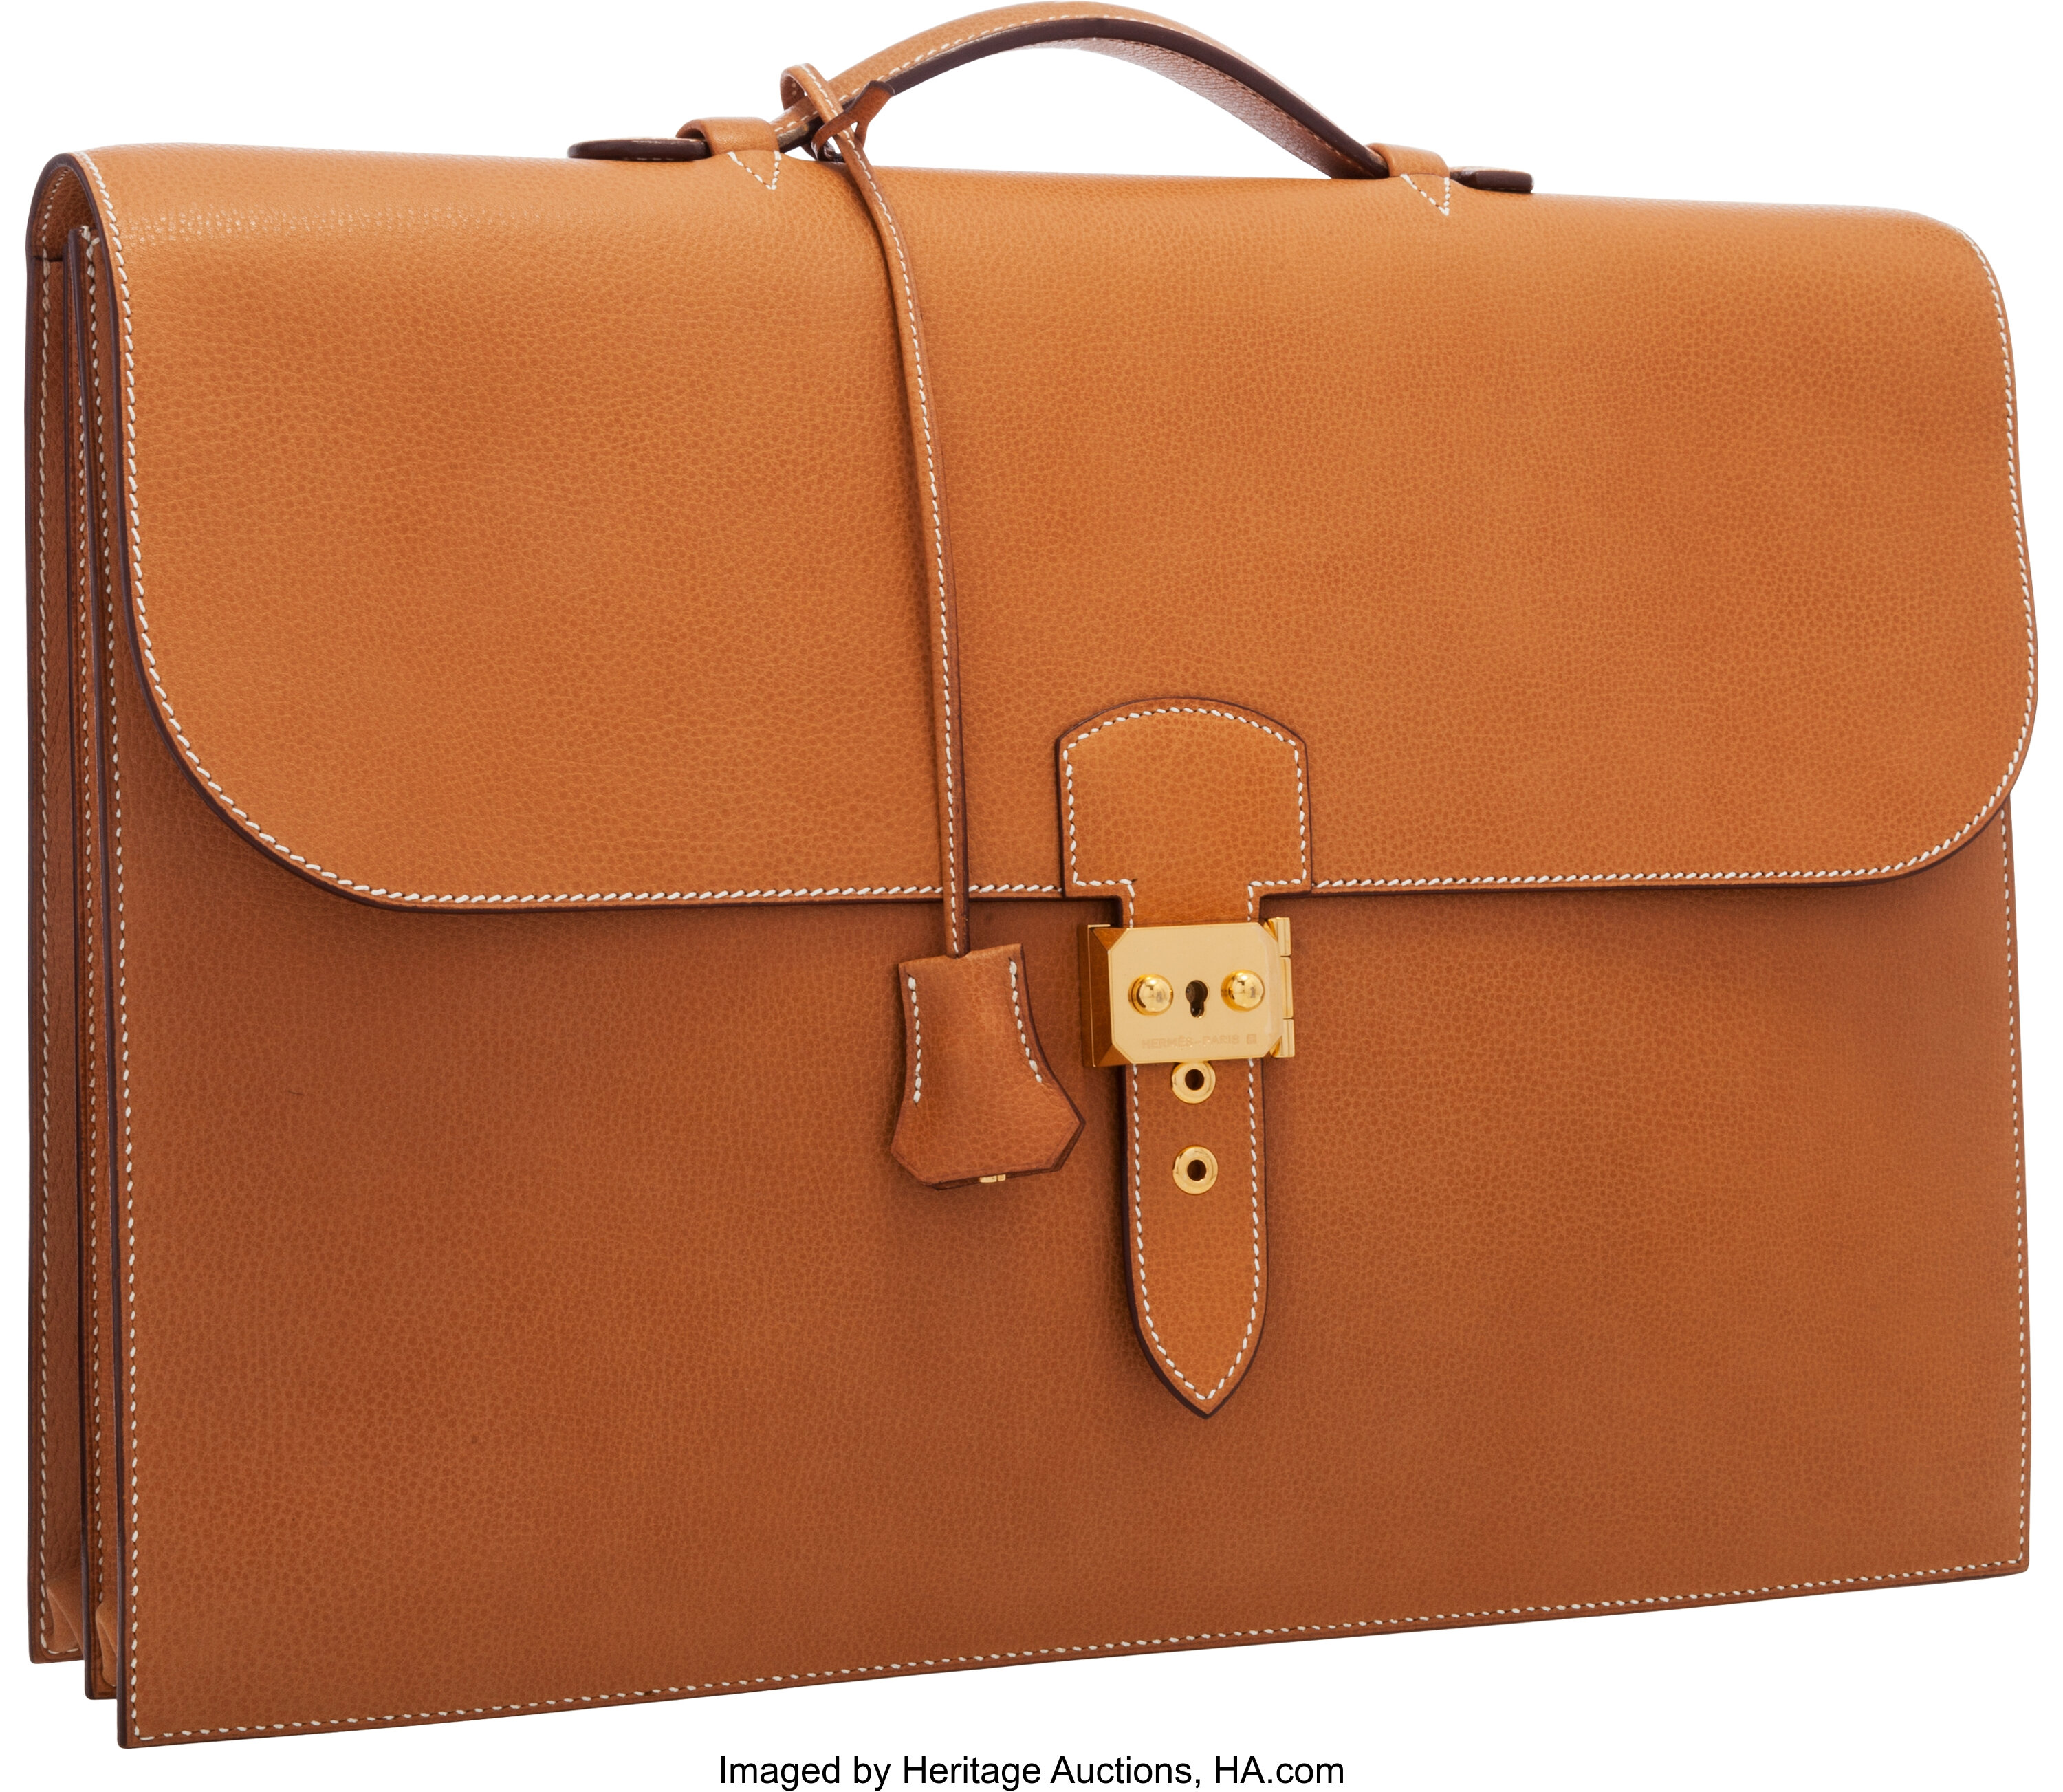 Louis Vuitton 'Vache Naturelle' Tan Leather Suitcase, circa 1935